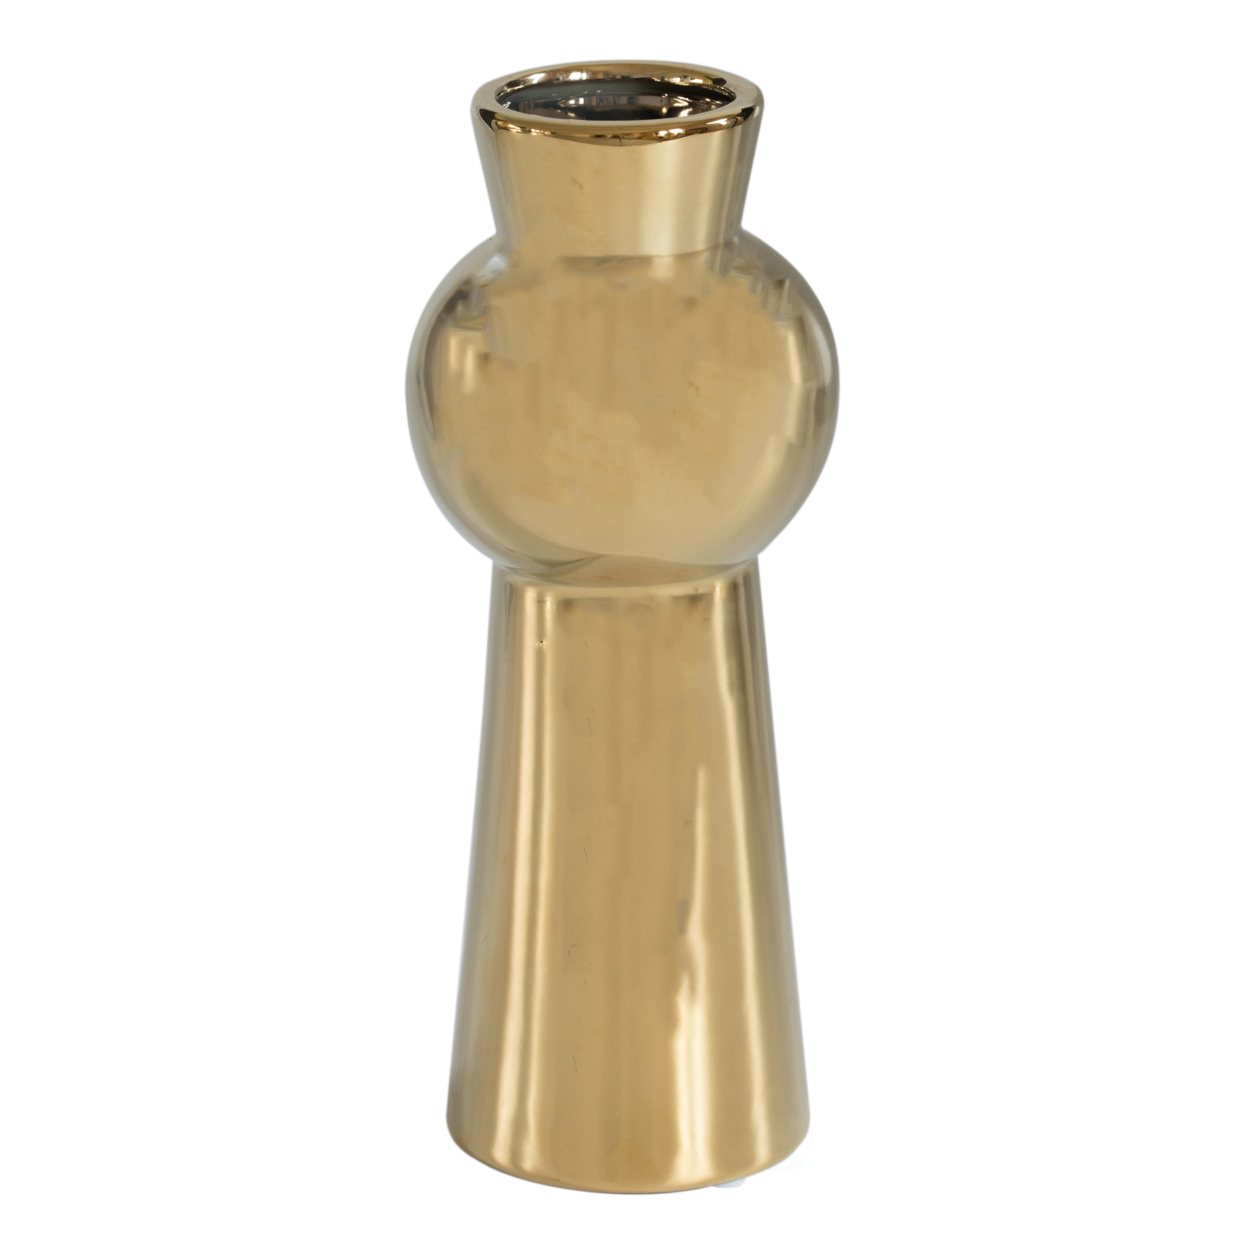 10.5 H Decorative Ceramic Ball Neck Flower Table Vase, Shiny Metallic Gold